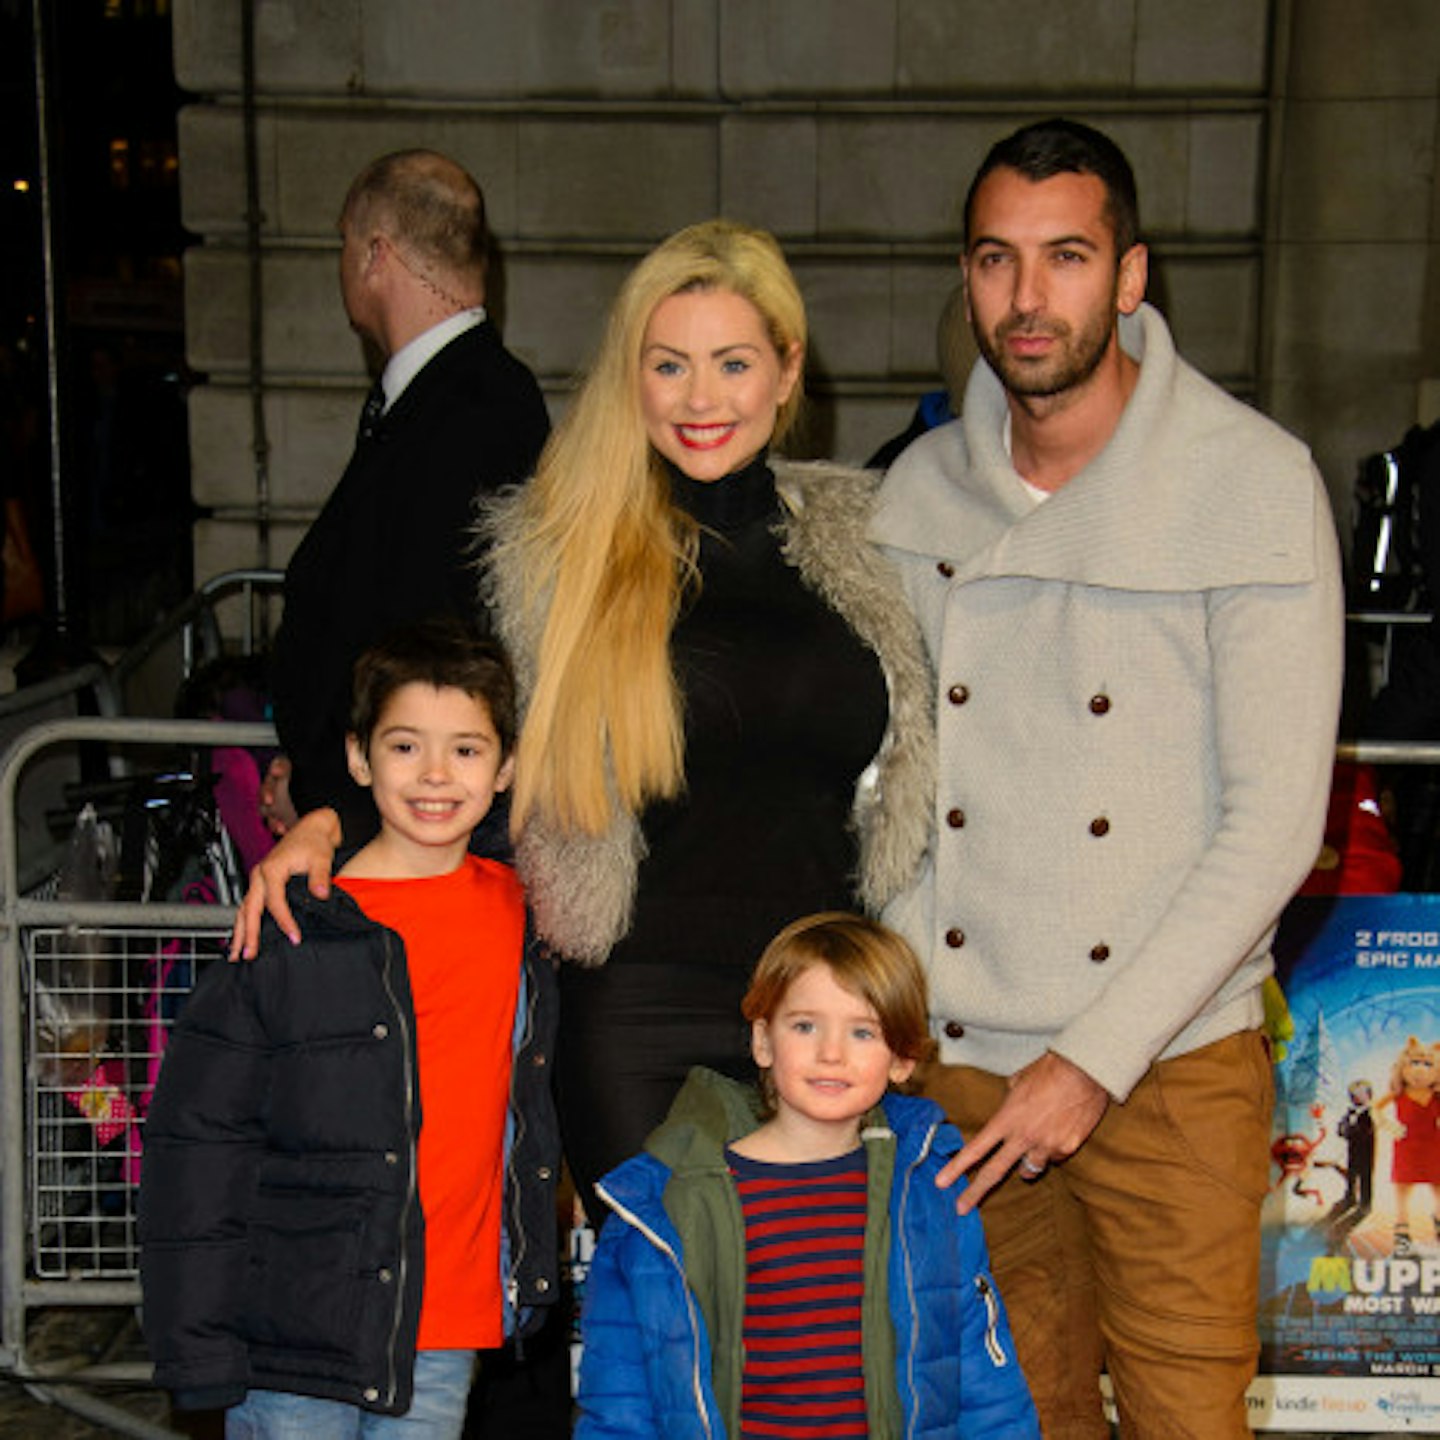 Nicola and family